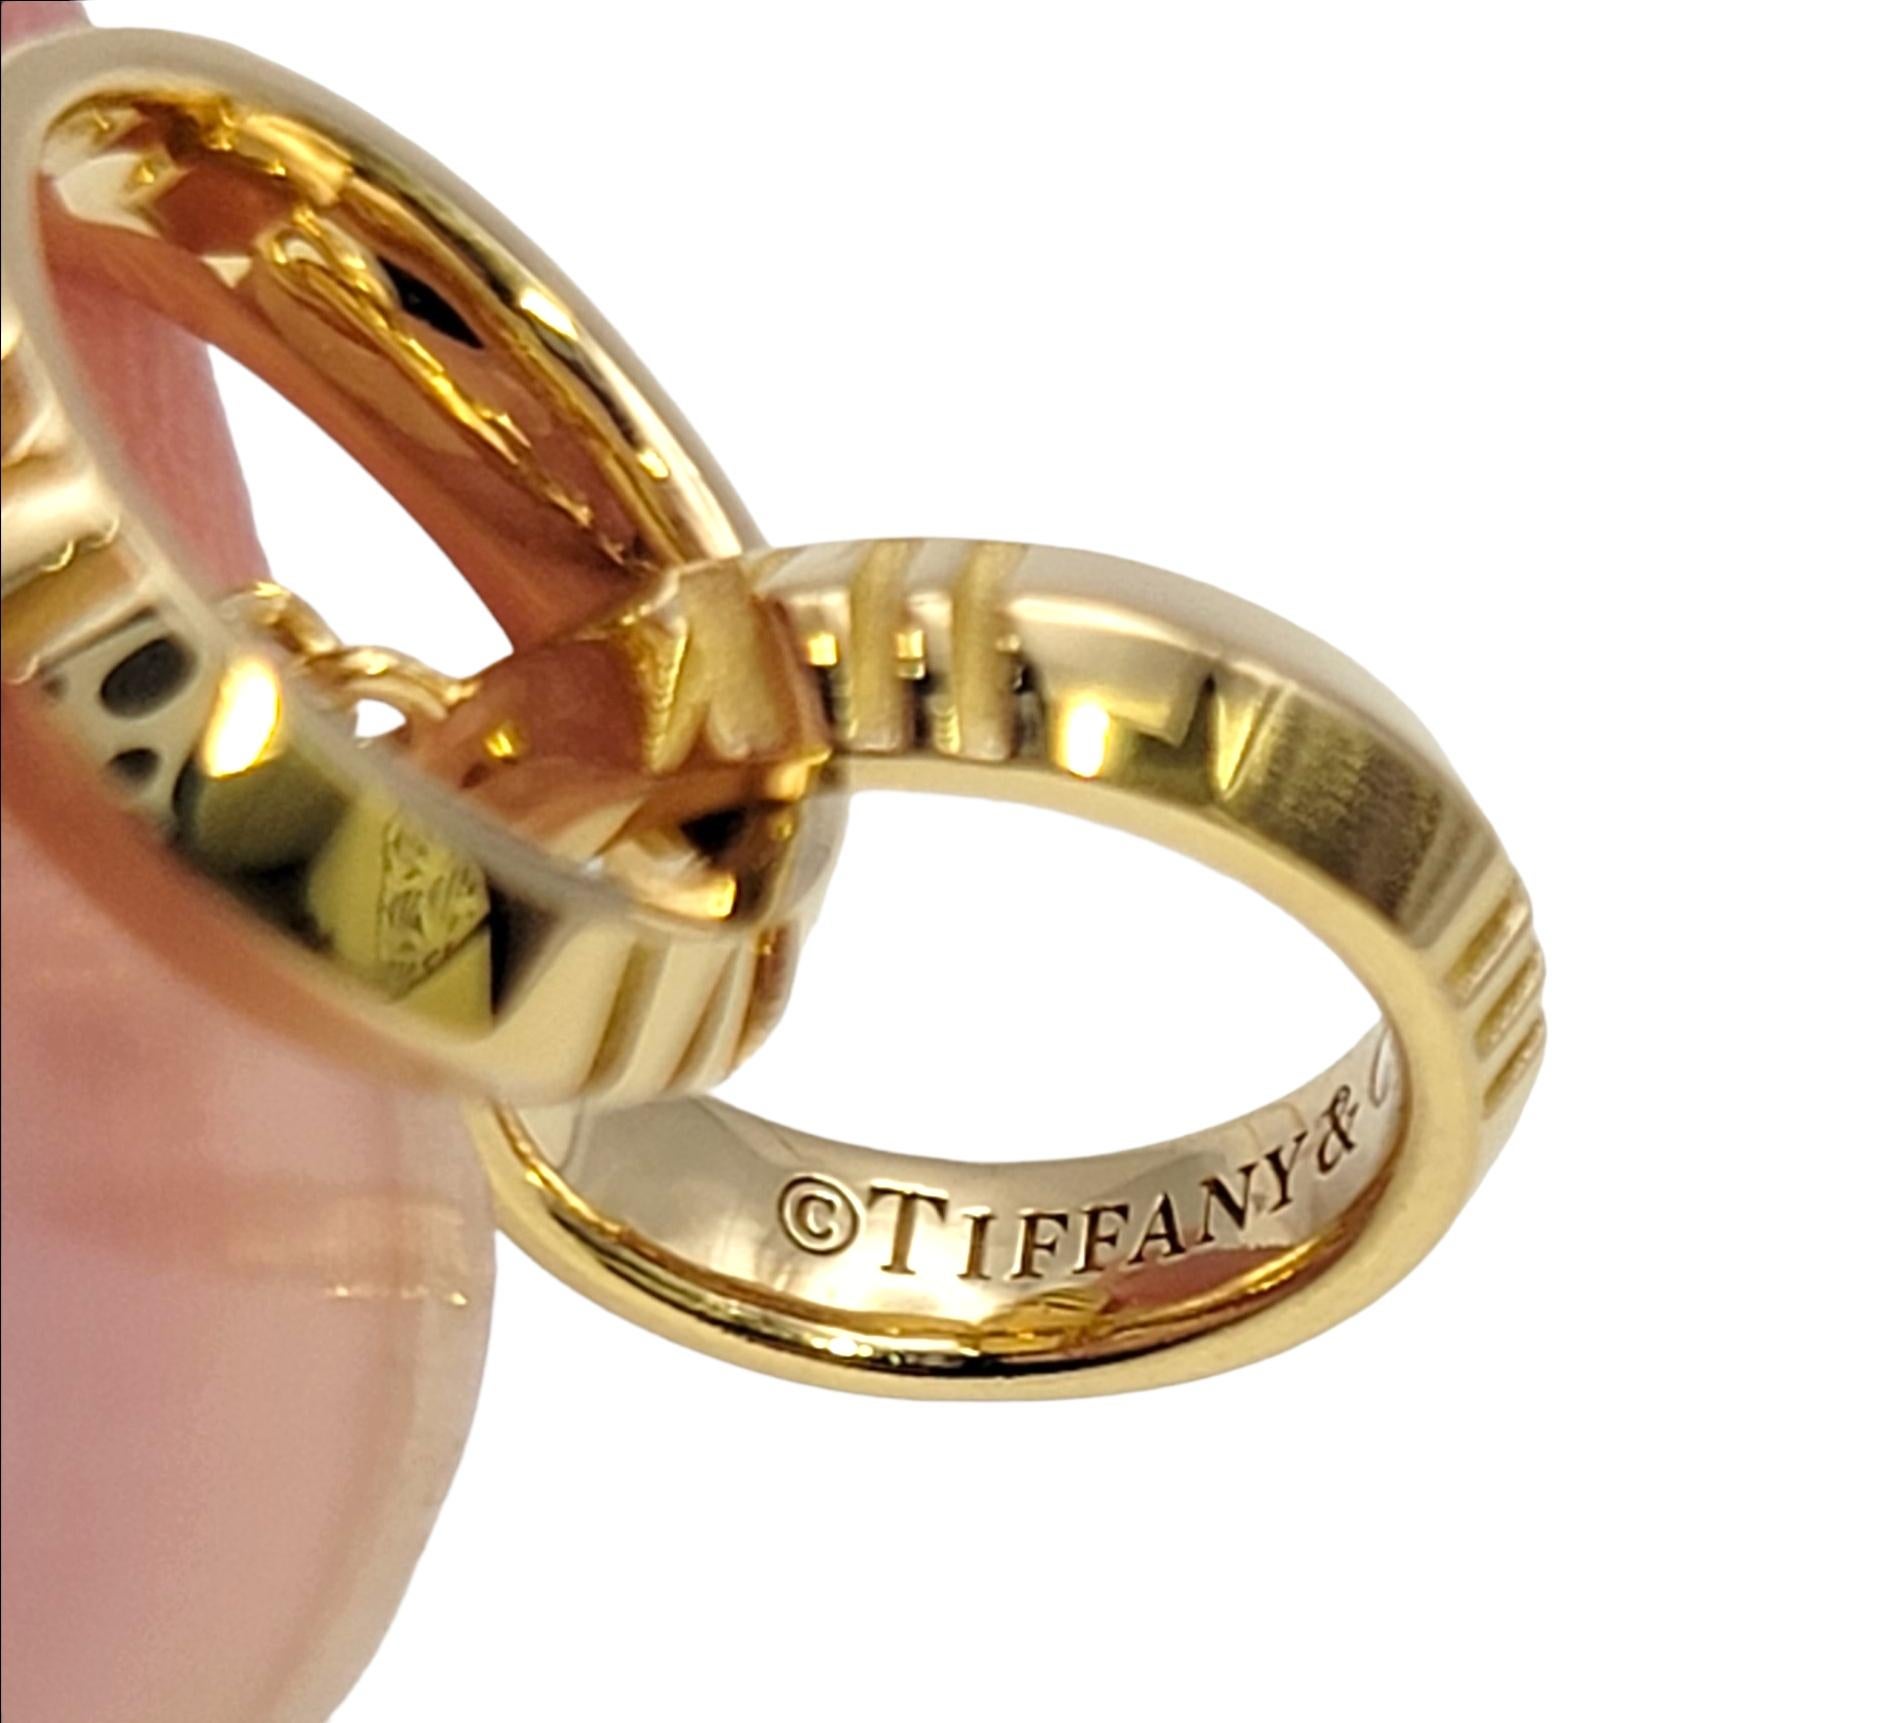 Tiffany & Co. Atlas, collier pendentif en or jaune 18 carats avec pendentif imbriqué en forme de X 8